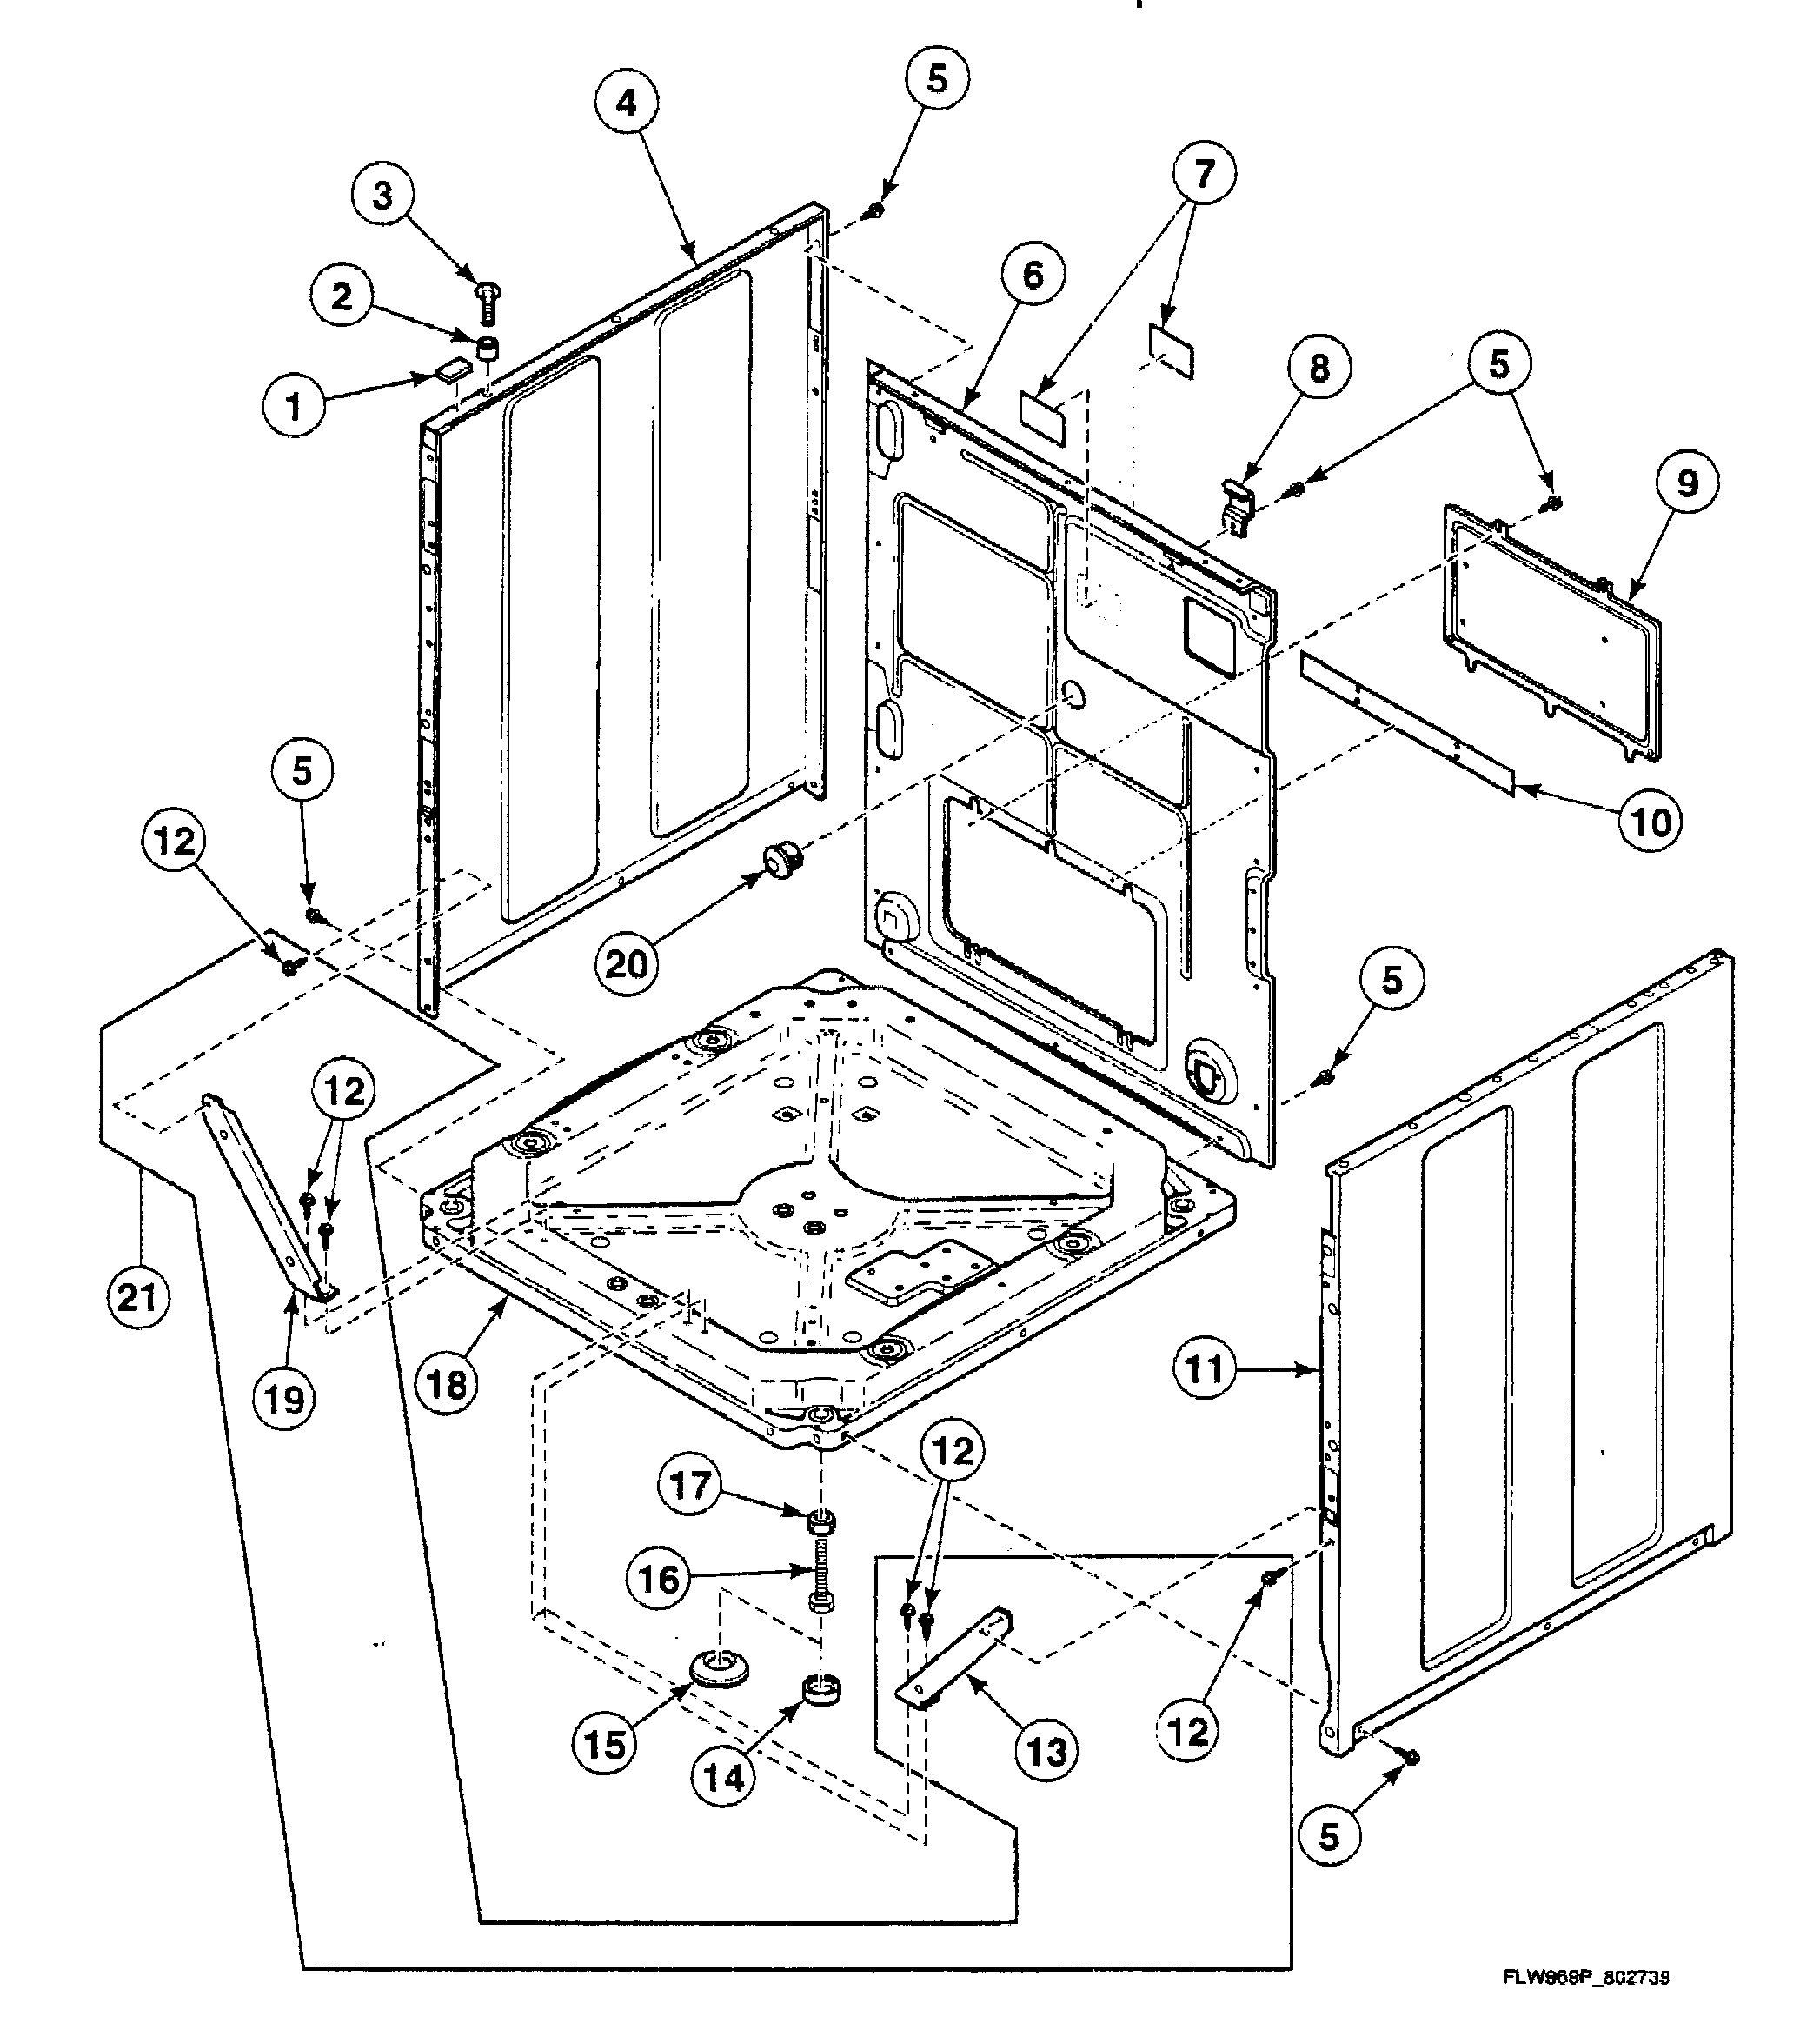 Washer Parts: Speed Queen Washer Parts Diagram